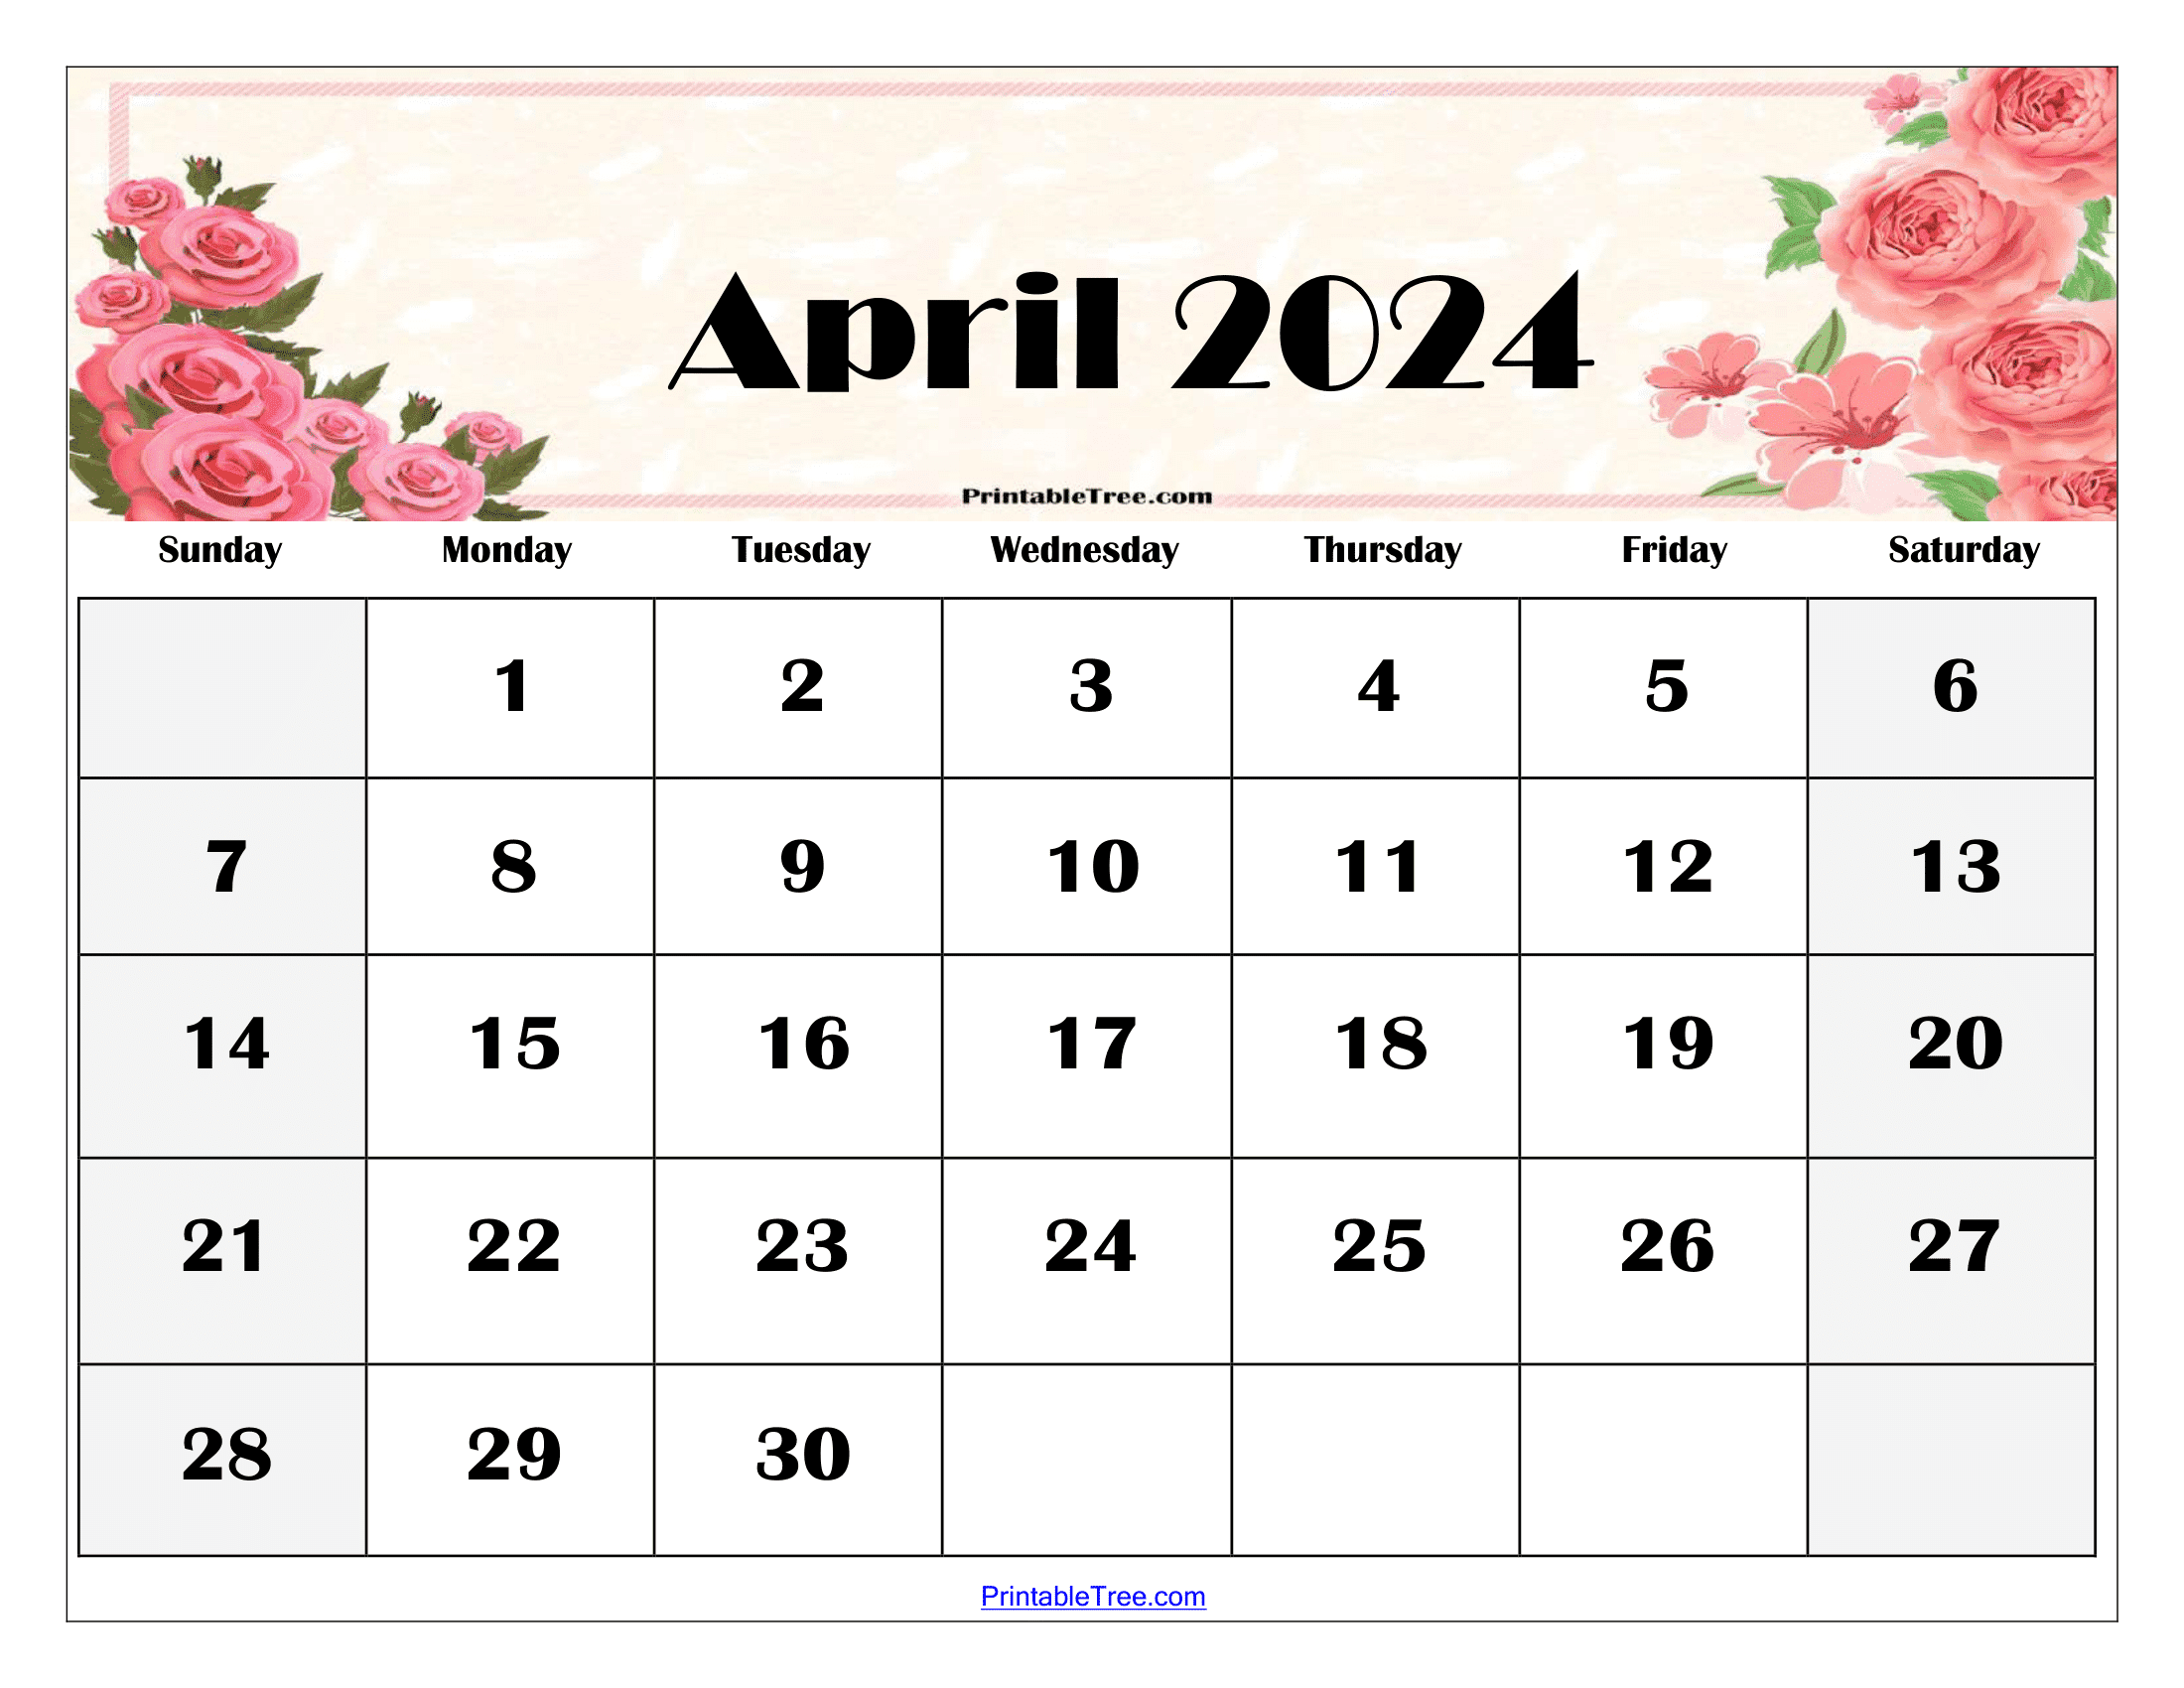 April 2024 Calendar Printable April Blank Calendar 2024 Easy To Use - Free Printable Calendar April 2024 Calendar